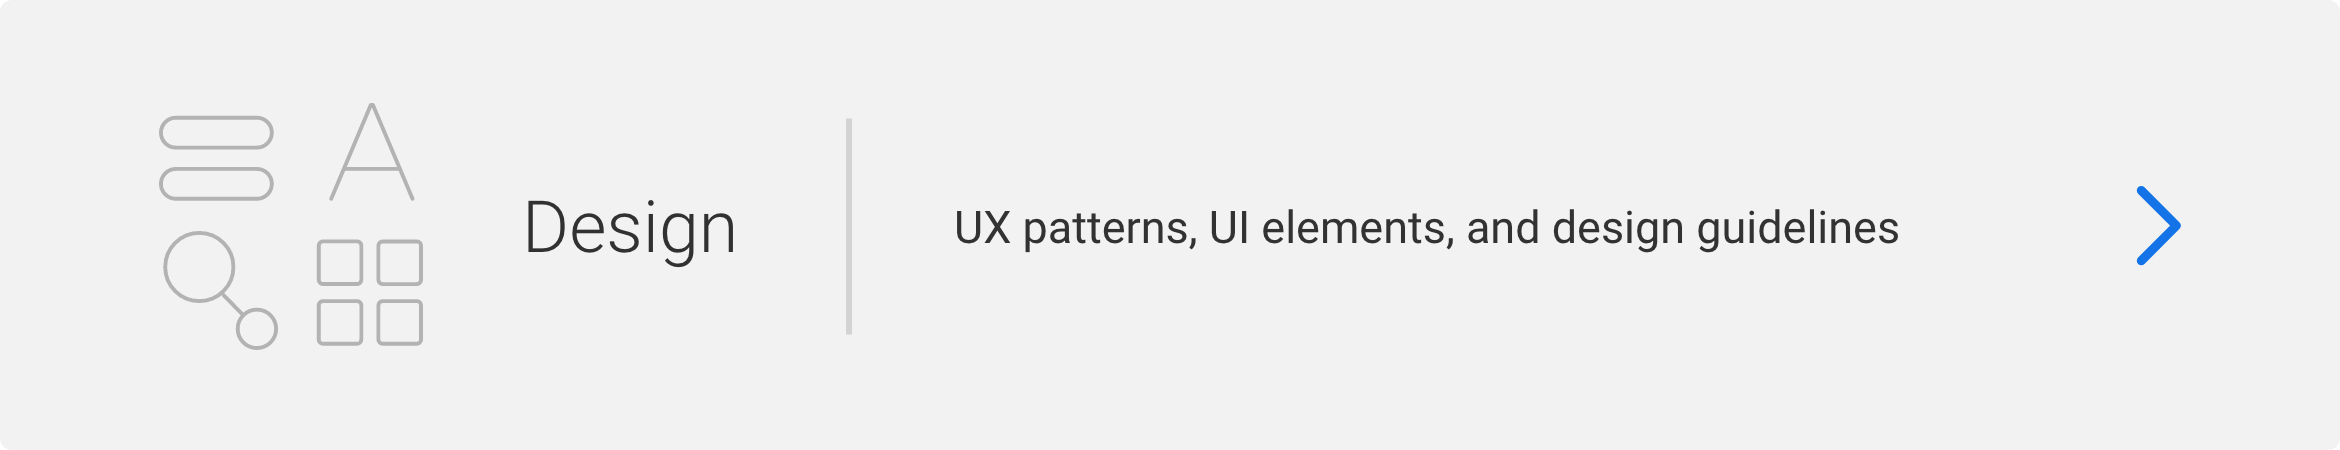 Design: UX patterns, UI elements, and design guidelines